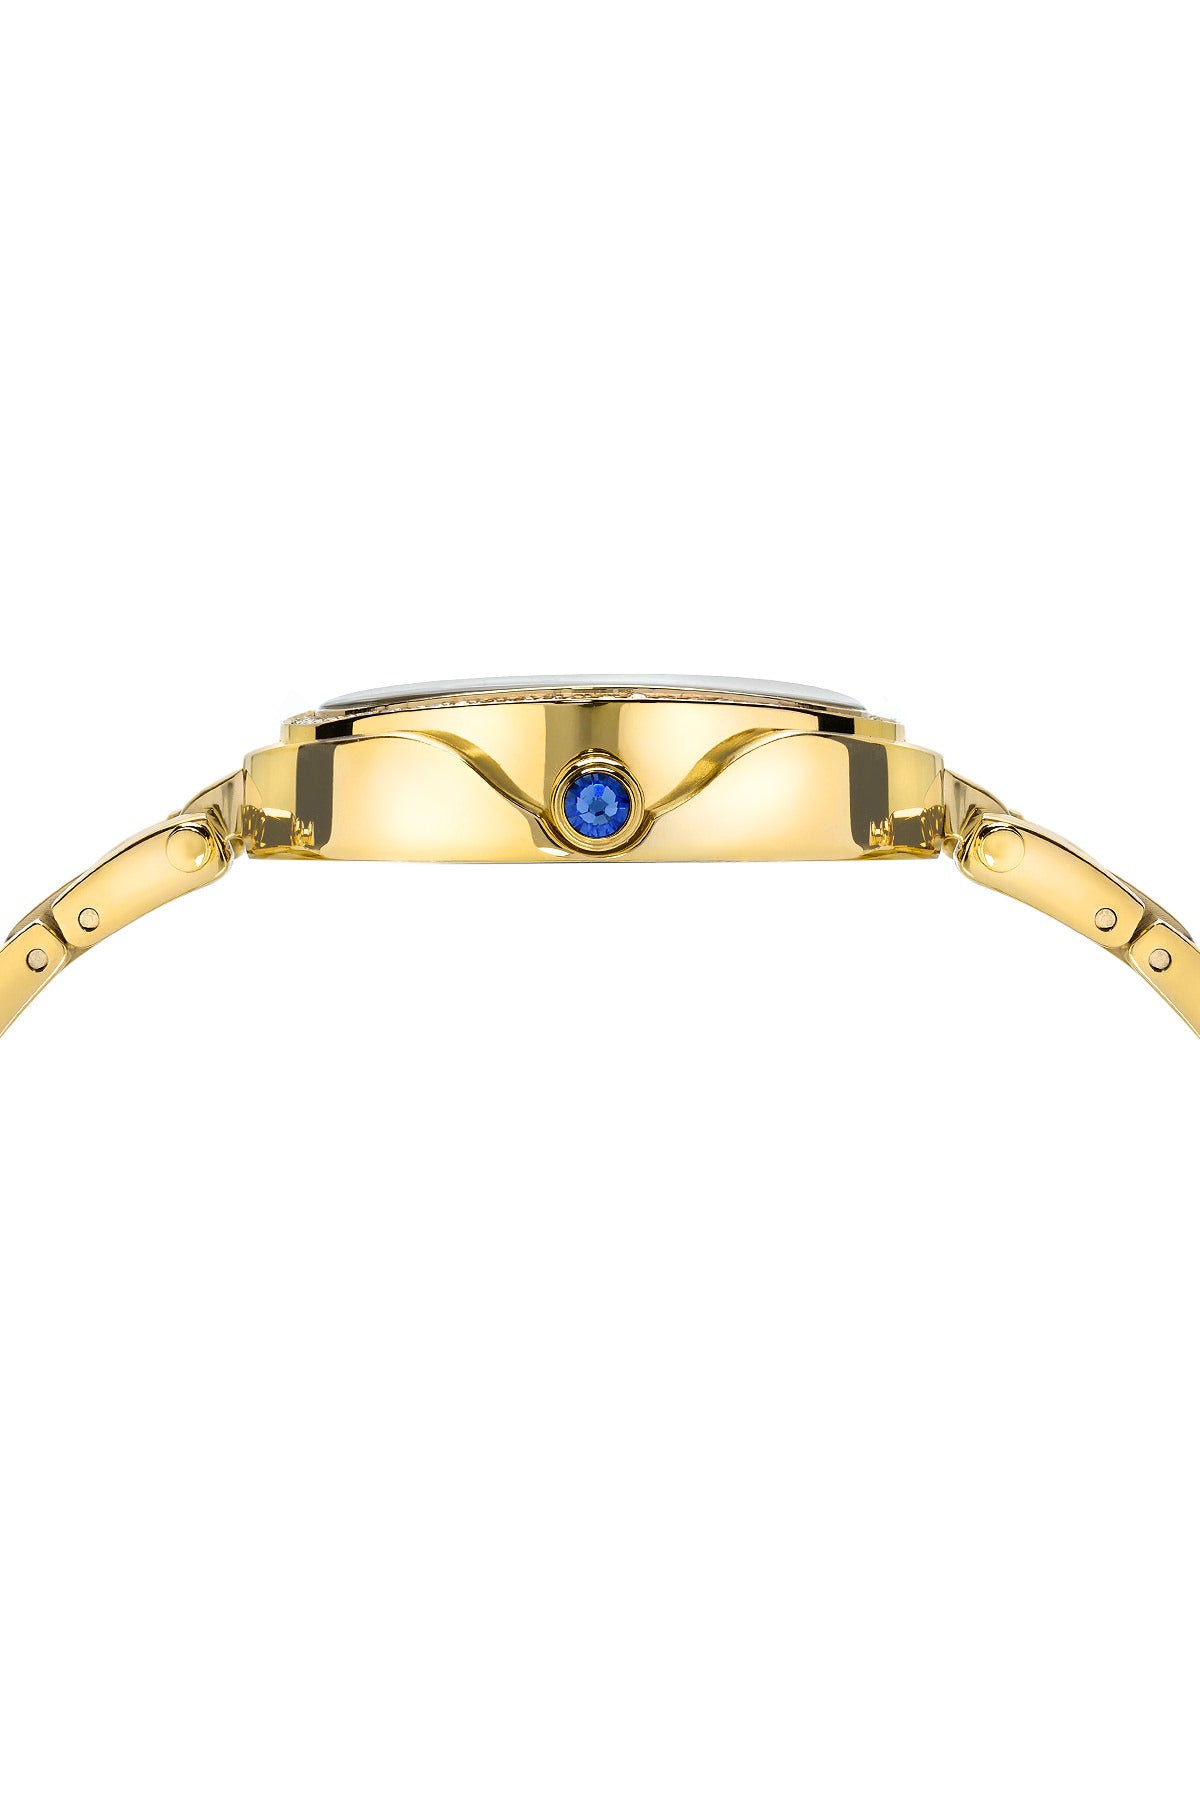 Porsamo Bleu South Sea Oval Crystal Luxury Women's Stainless Steel Watch, Champagne 106BSSO